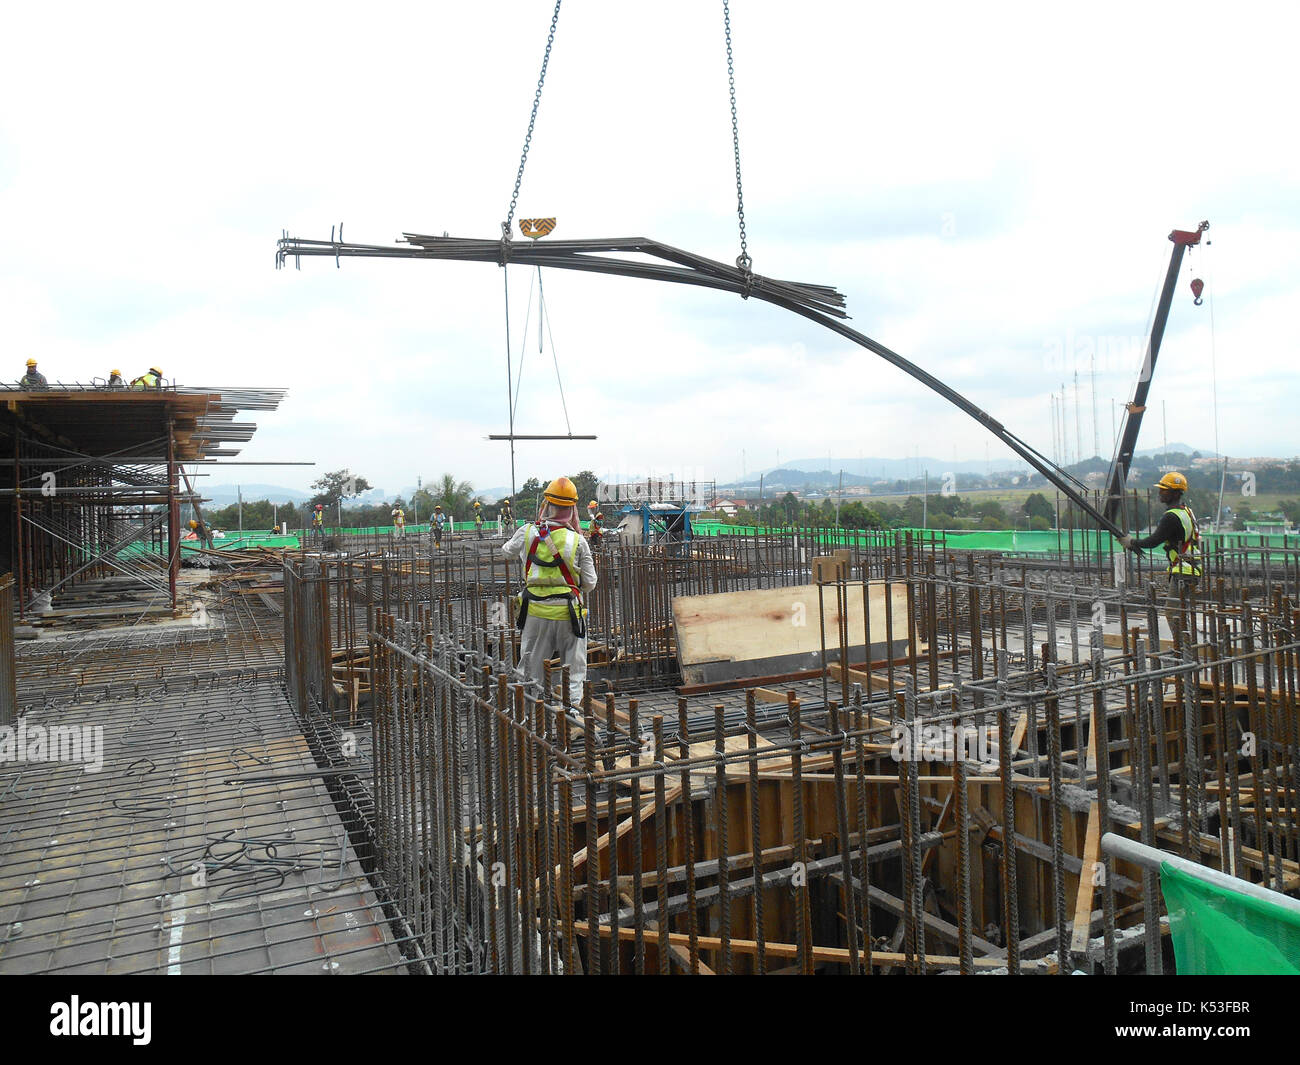 Malakka, Malaysia - 25. FEBRUAR 2017: Baustelle in Fortschritte in Malacca, Malaysia, tagsüber. Tägliche Aktivität ist im Gange. Stockfoto